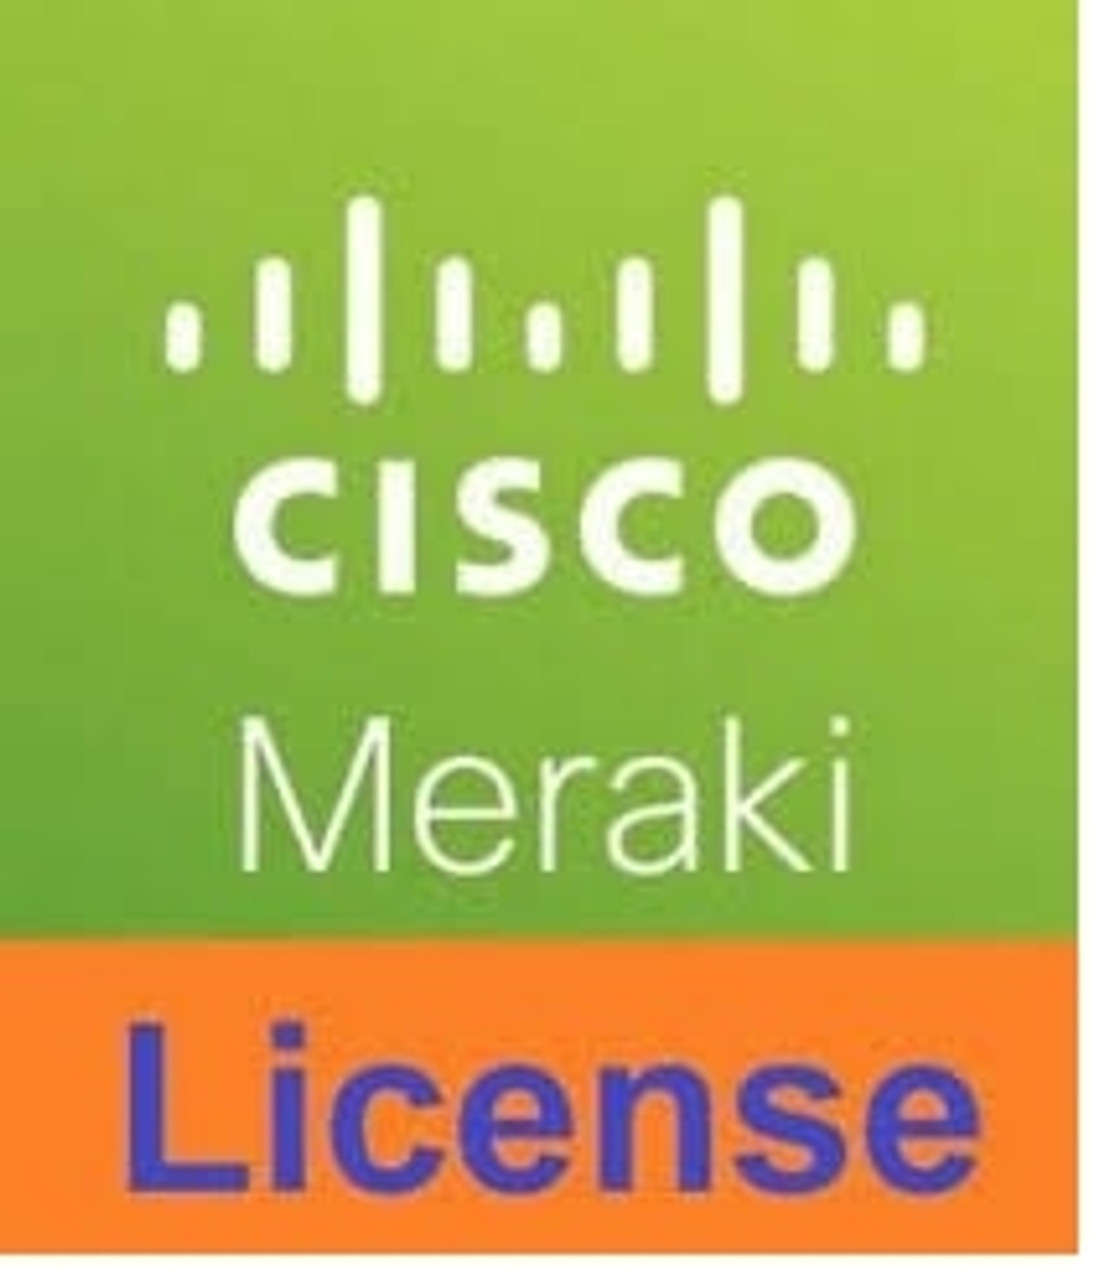 EOS Meraki MS420-24 Enterprise License and Support, 7 Year